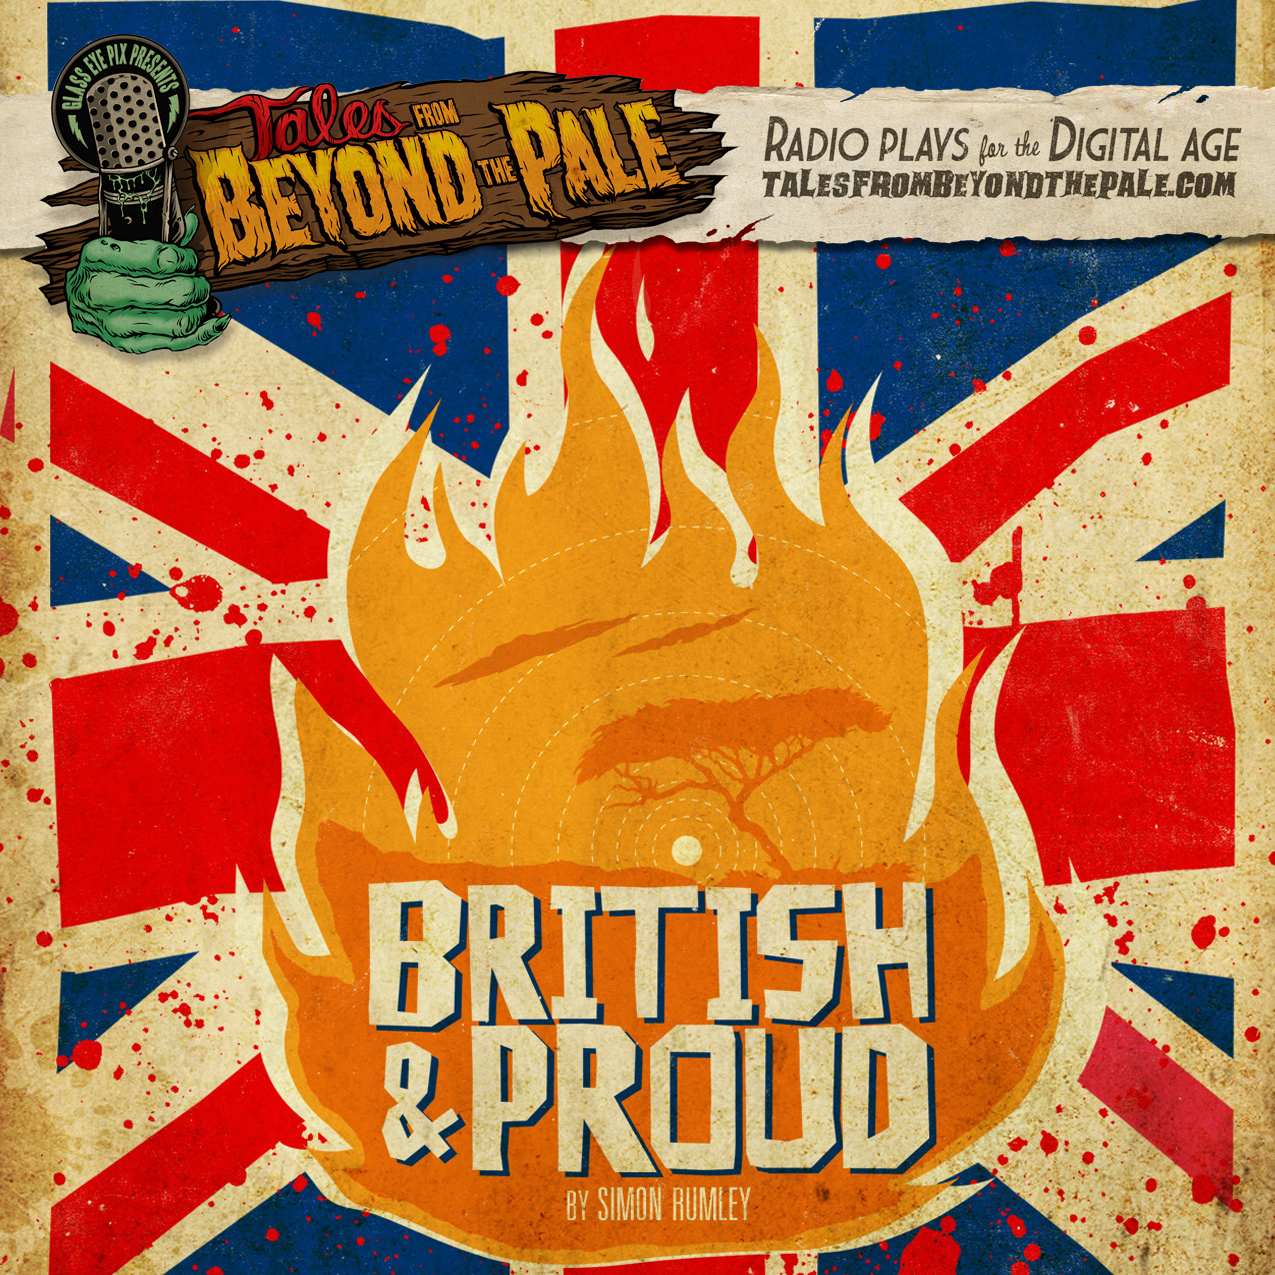 Episode 45: British and Proud